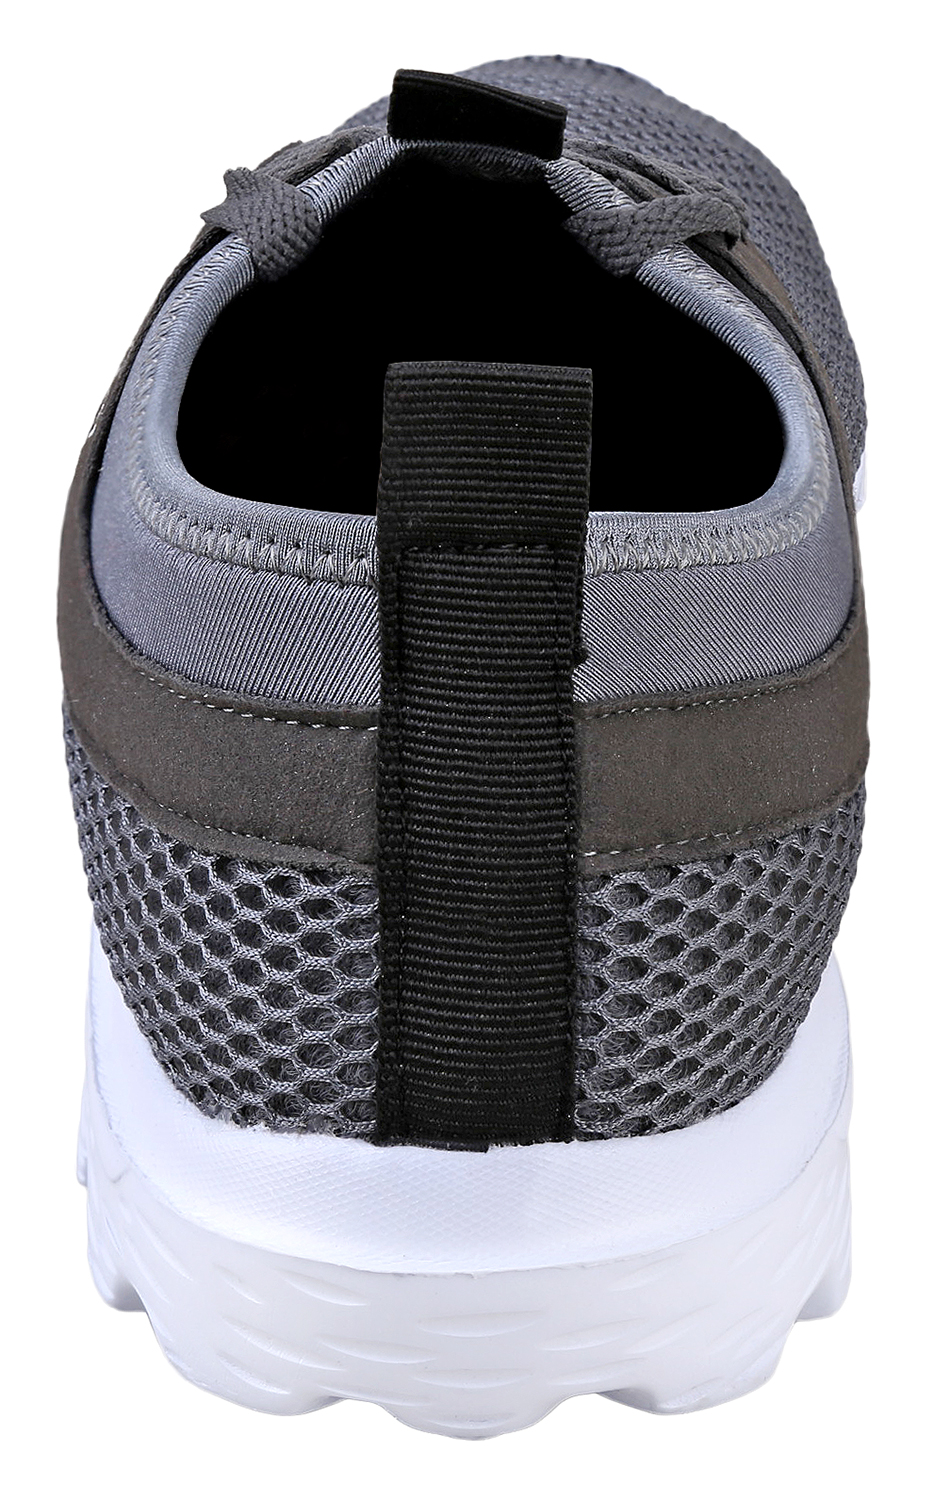 Urban Fox Men's Breeze Lightweight Shoes | Lightweight Shoes for Men | Casual Shoes | Walking Shoes for Men | Grey/White 11 M US - image 4 of 7